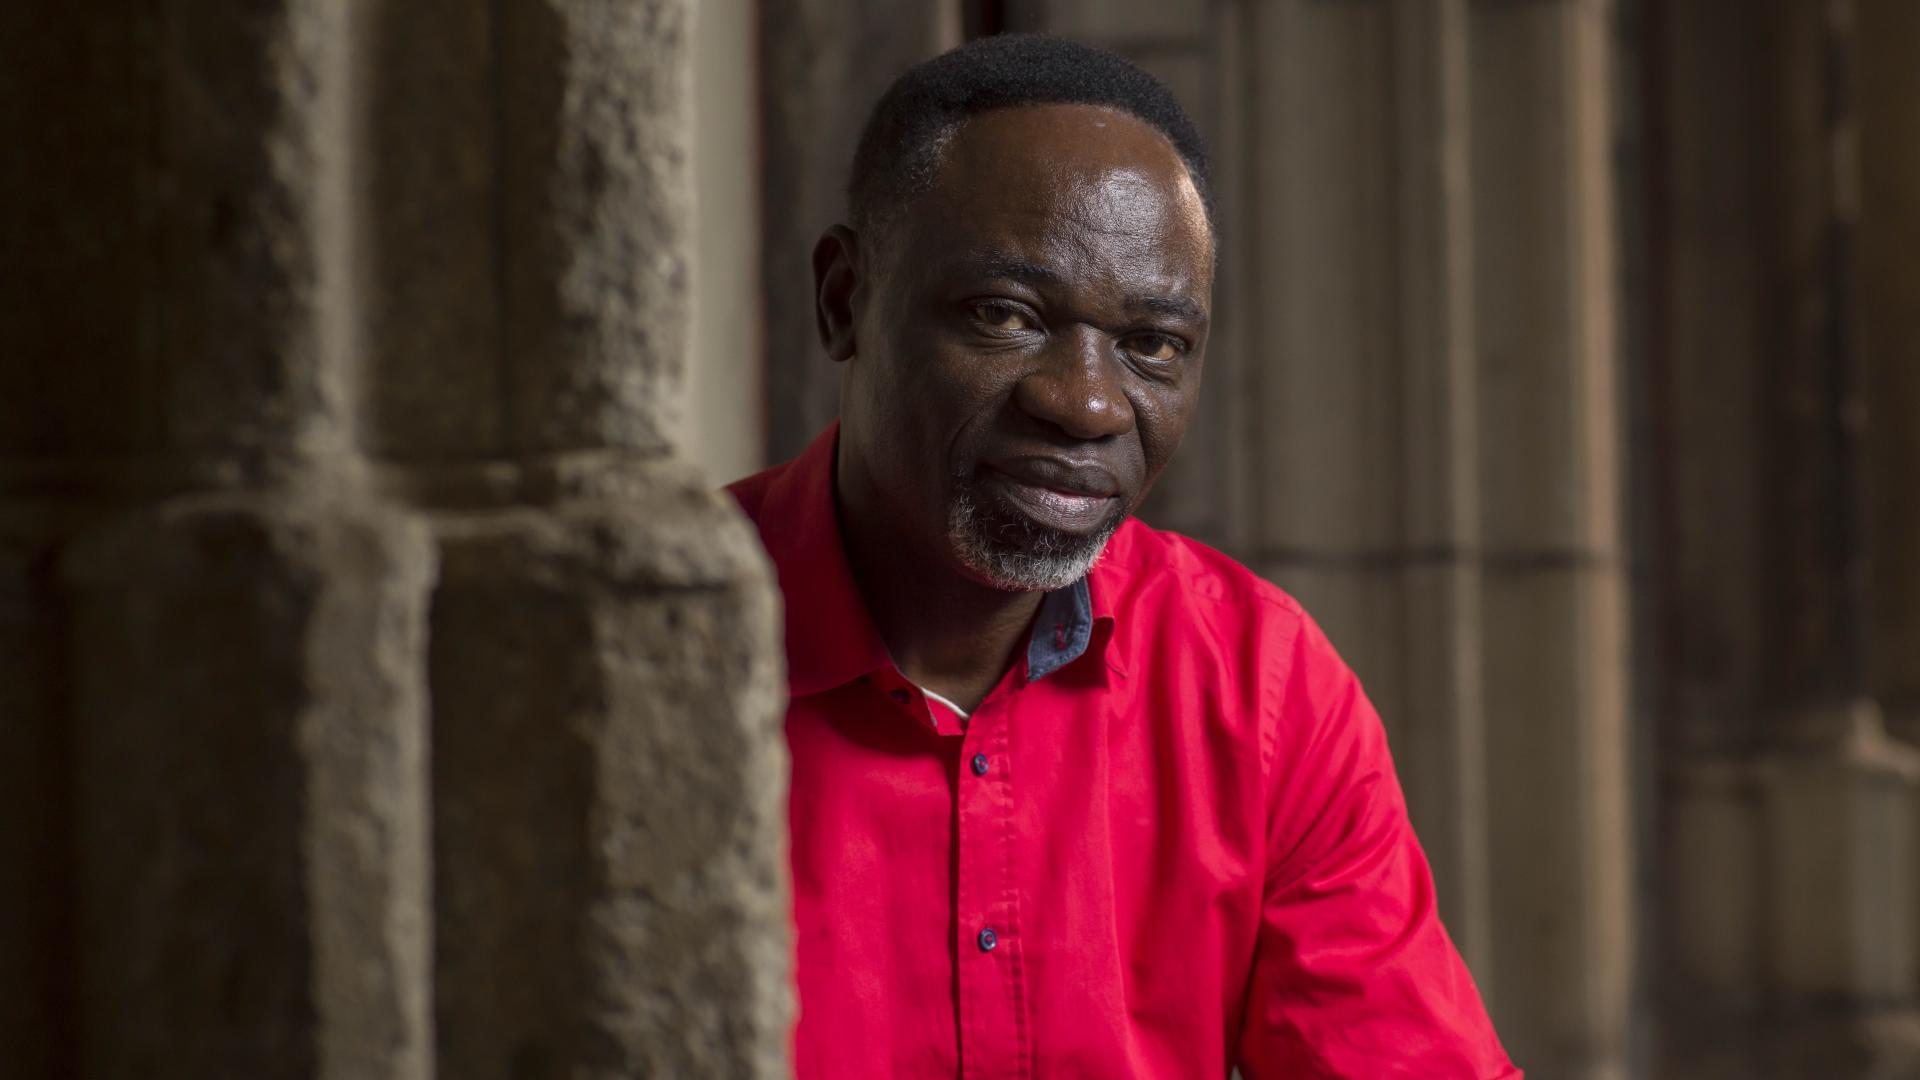 Tearfund-ambassadeur Moses Alagbe, dakloosheid dreigt voor zijn kerk